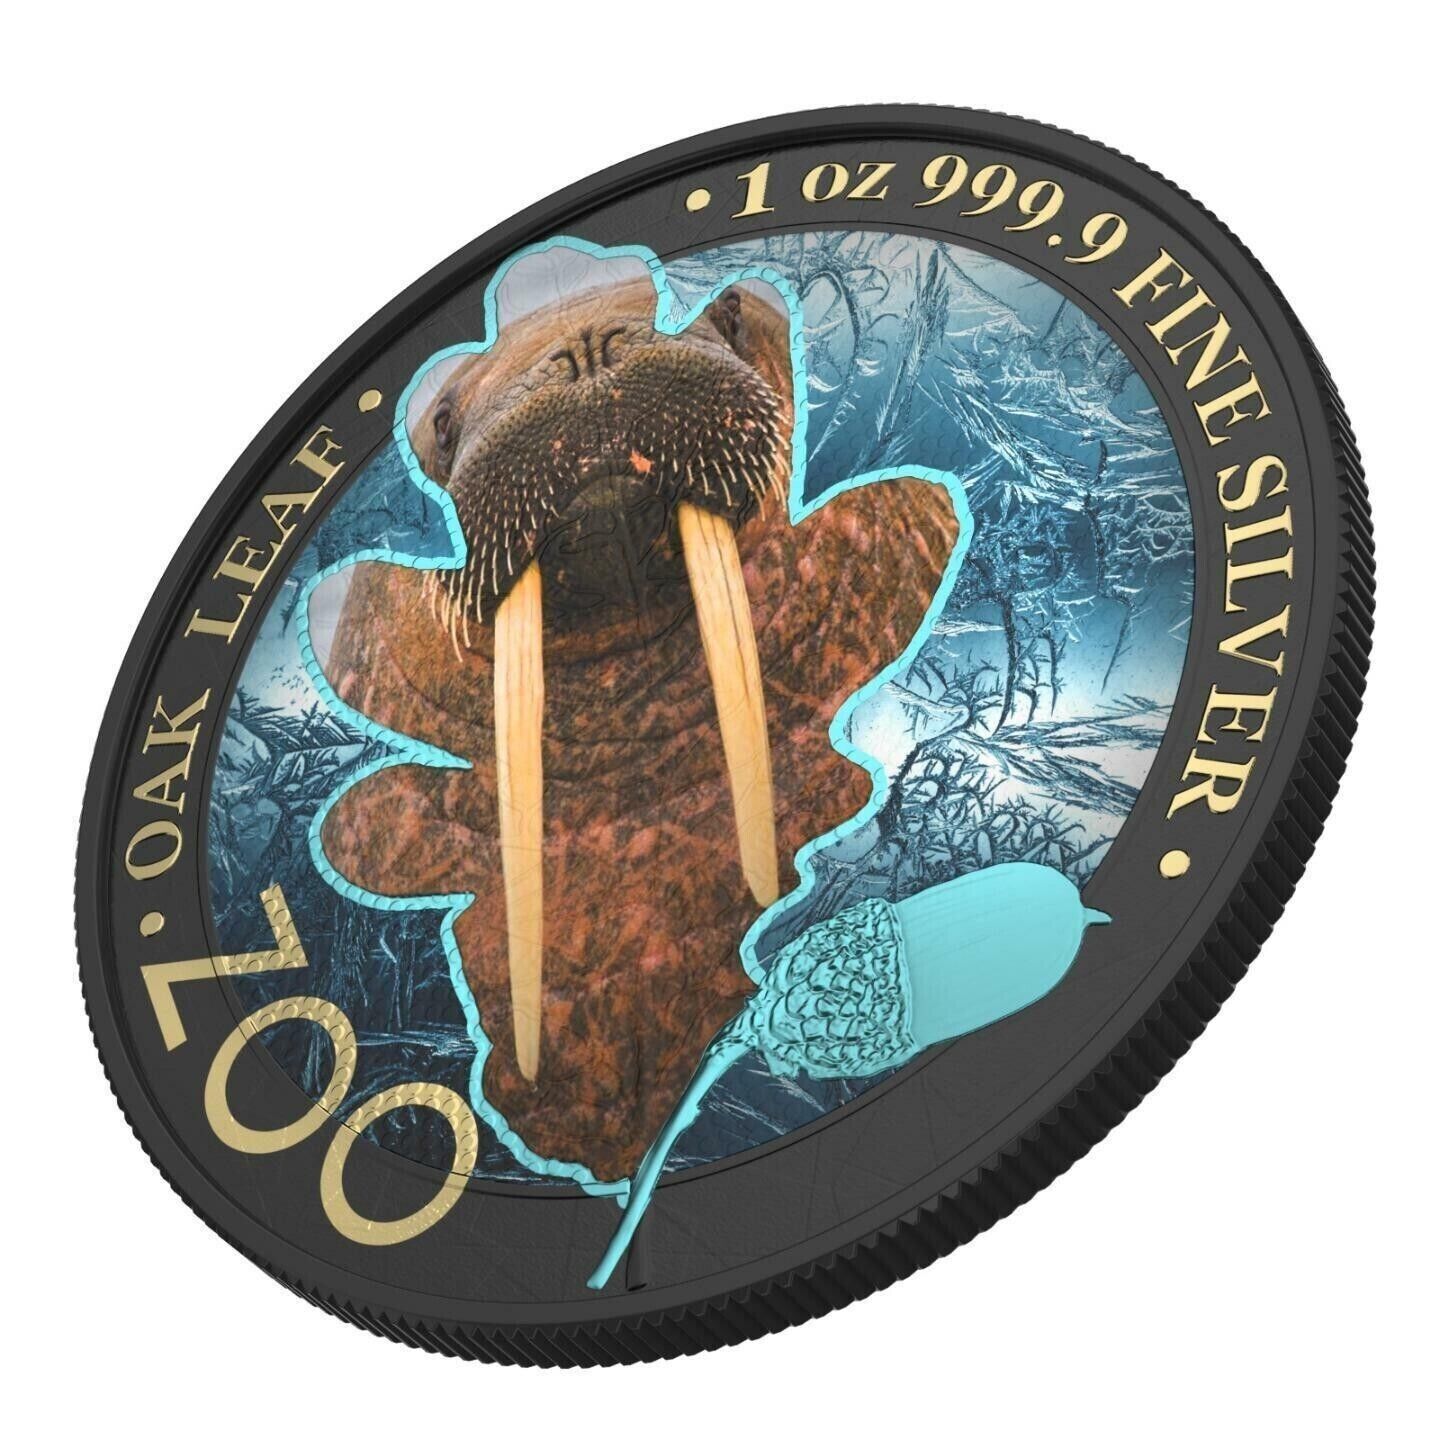 1 Oz Silver Coin 2019 5 Mark Germania Oak Leaf Zoo Series - Pacific Walrus-classypw.com-1